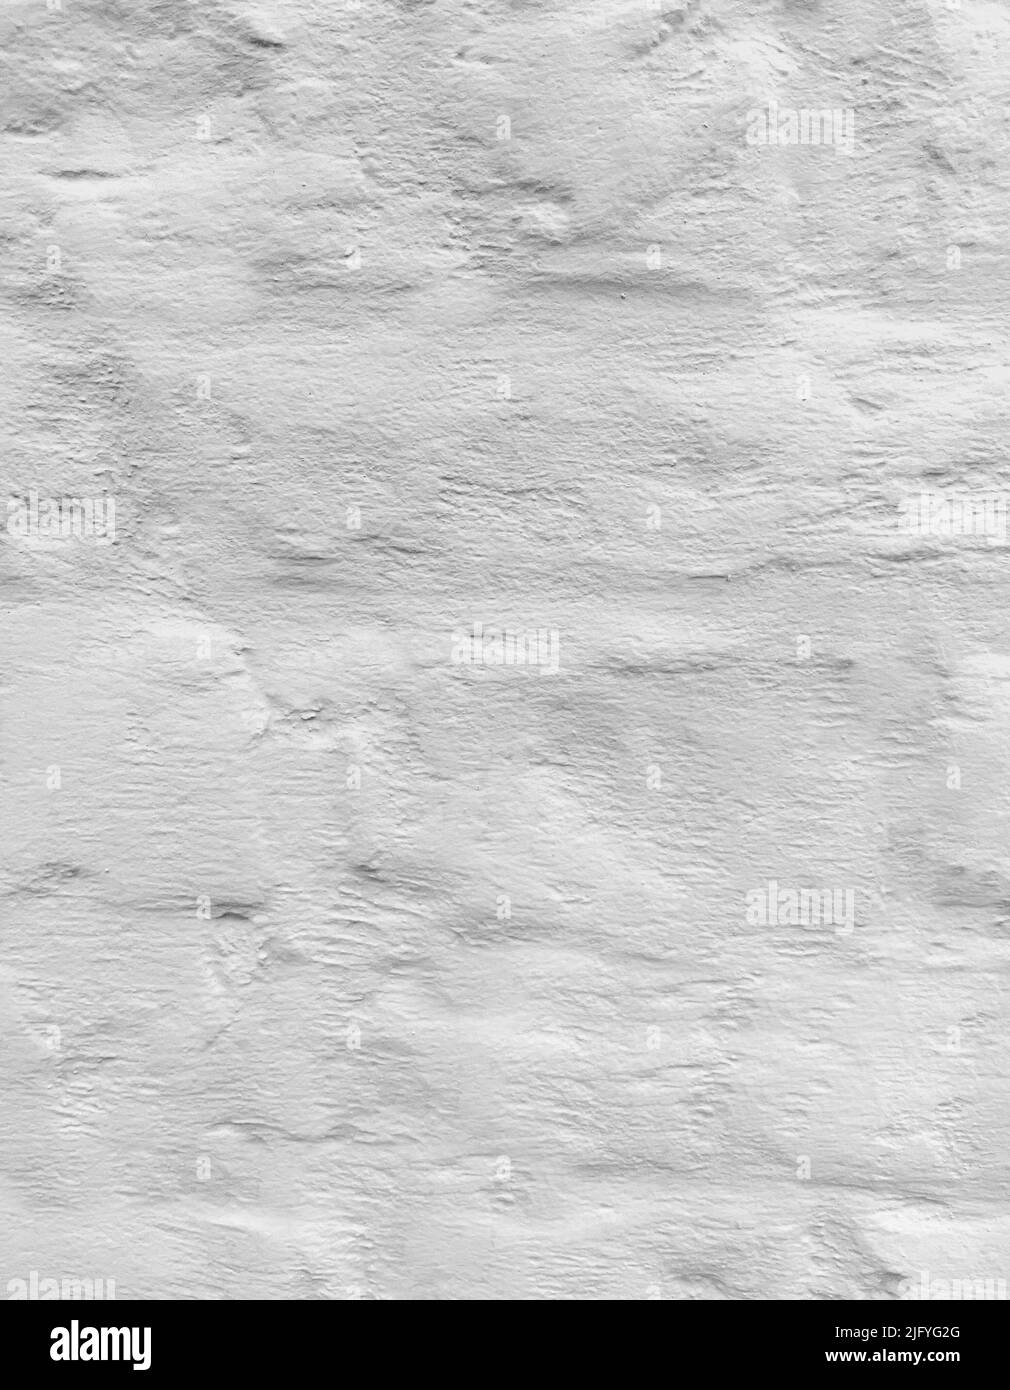 Primer plano de una textura de yeso o cemento blanco voluminoso e irregular  Fotografía de stock - Alamy